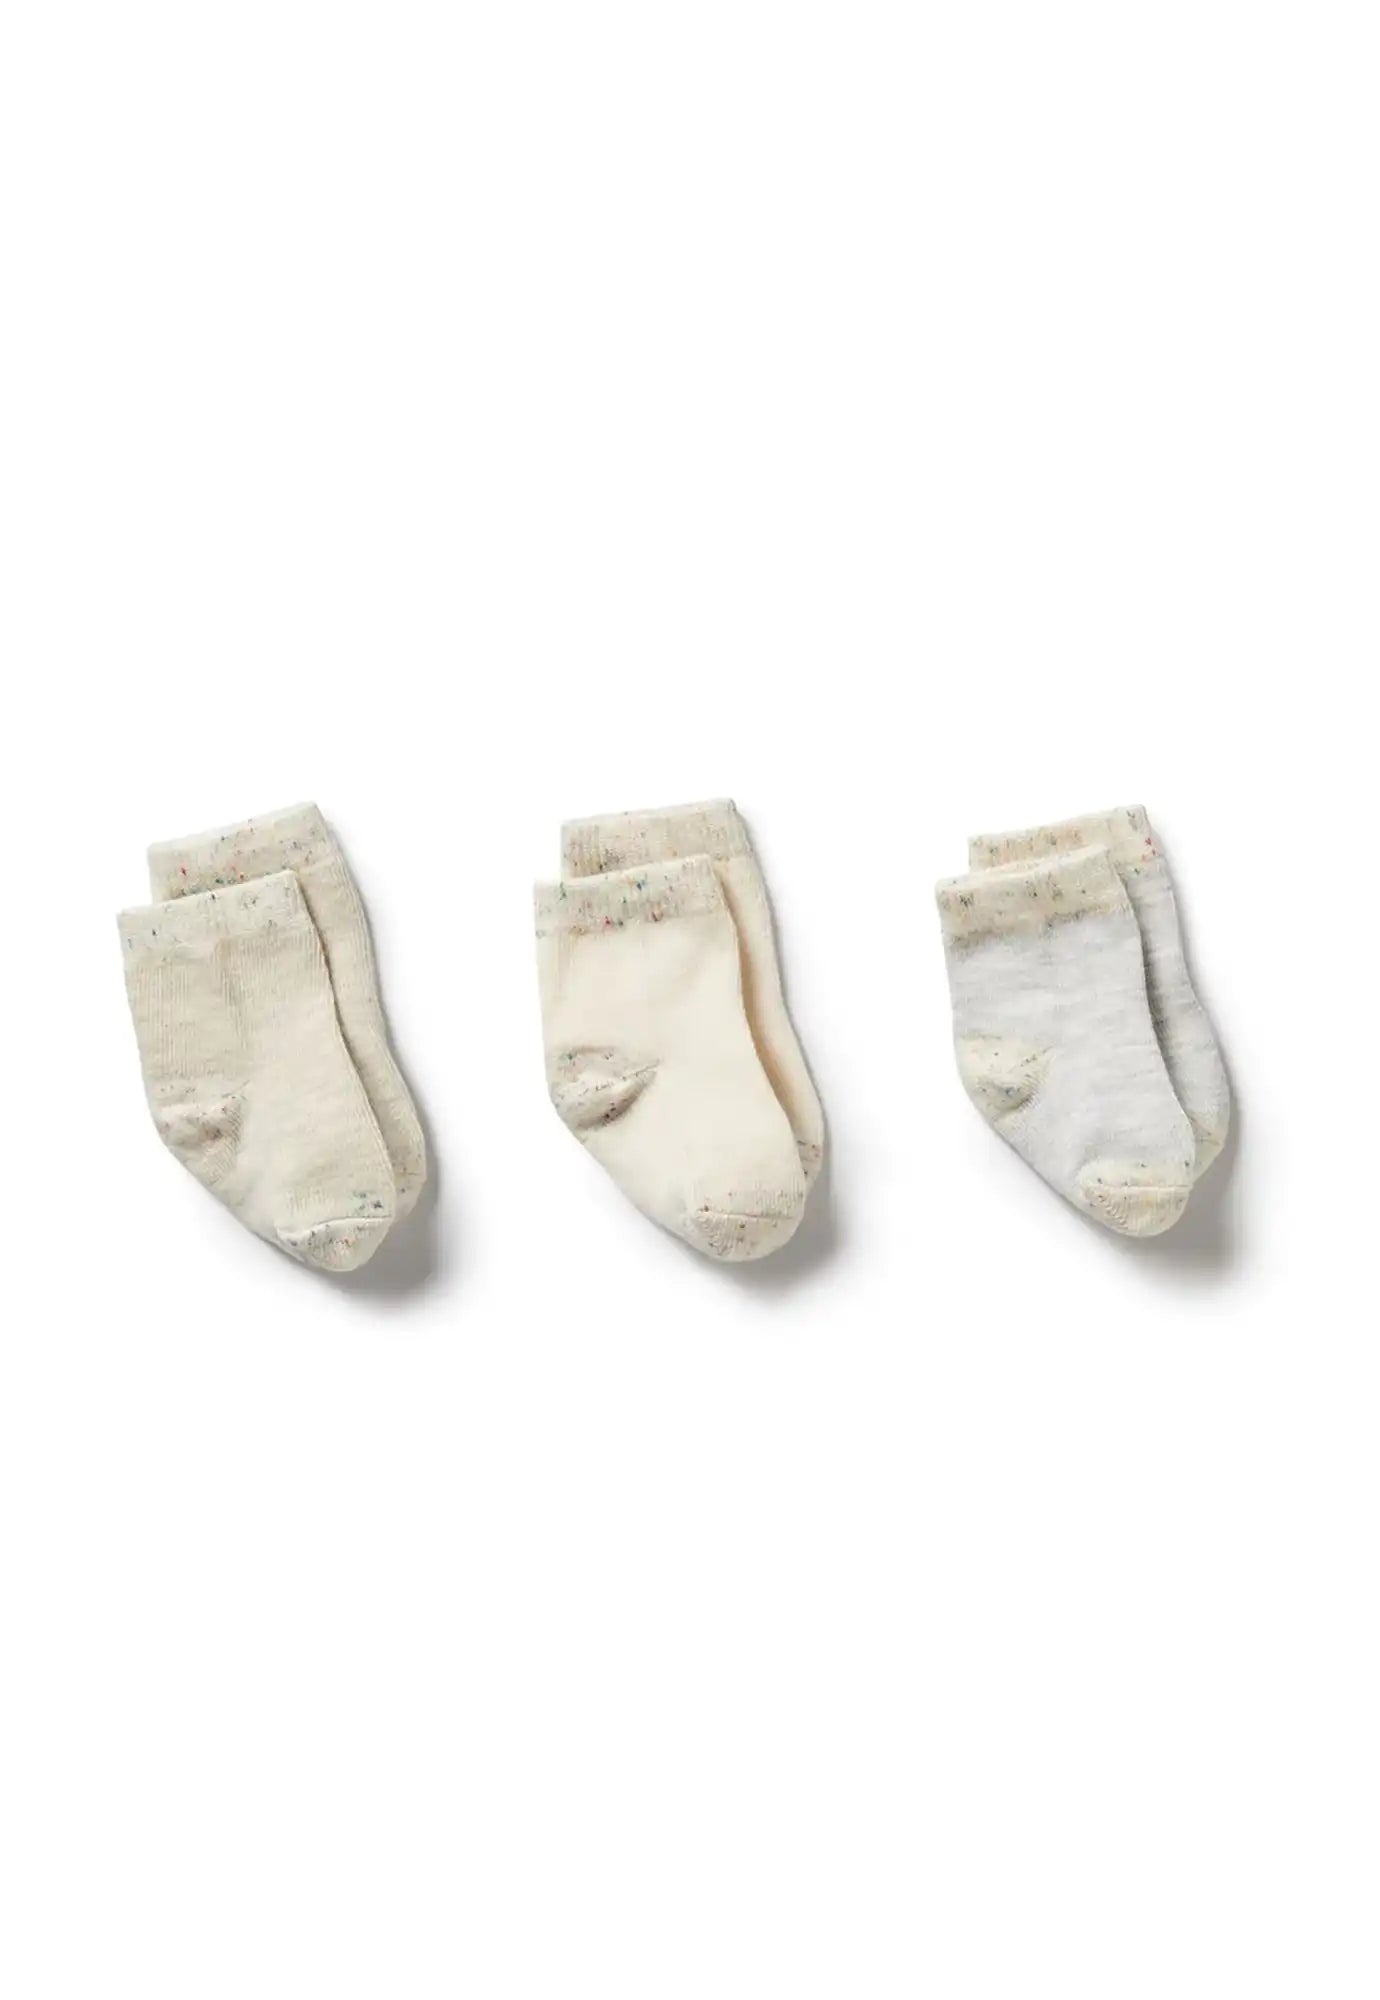 wilson & frenchy - organic 3 pack socks - cream oatmeal grey cloud